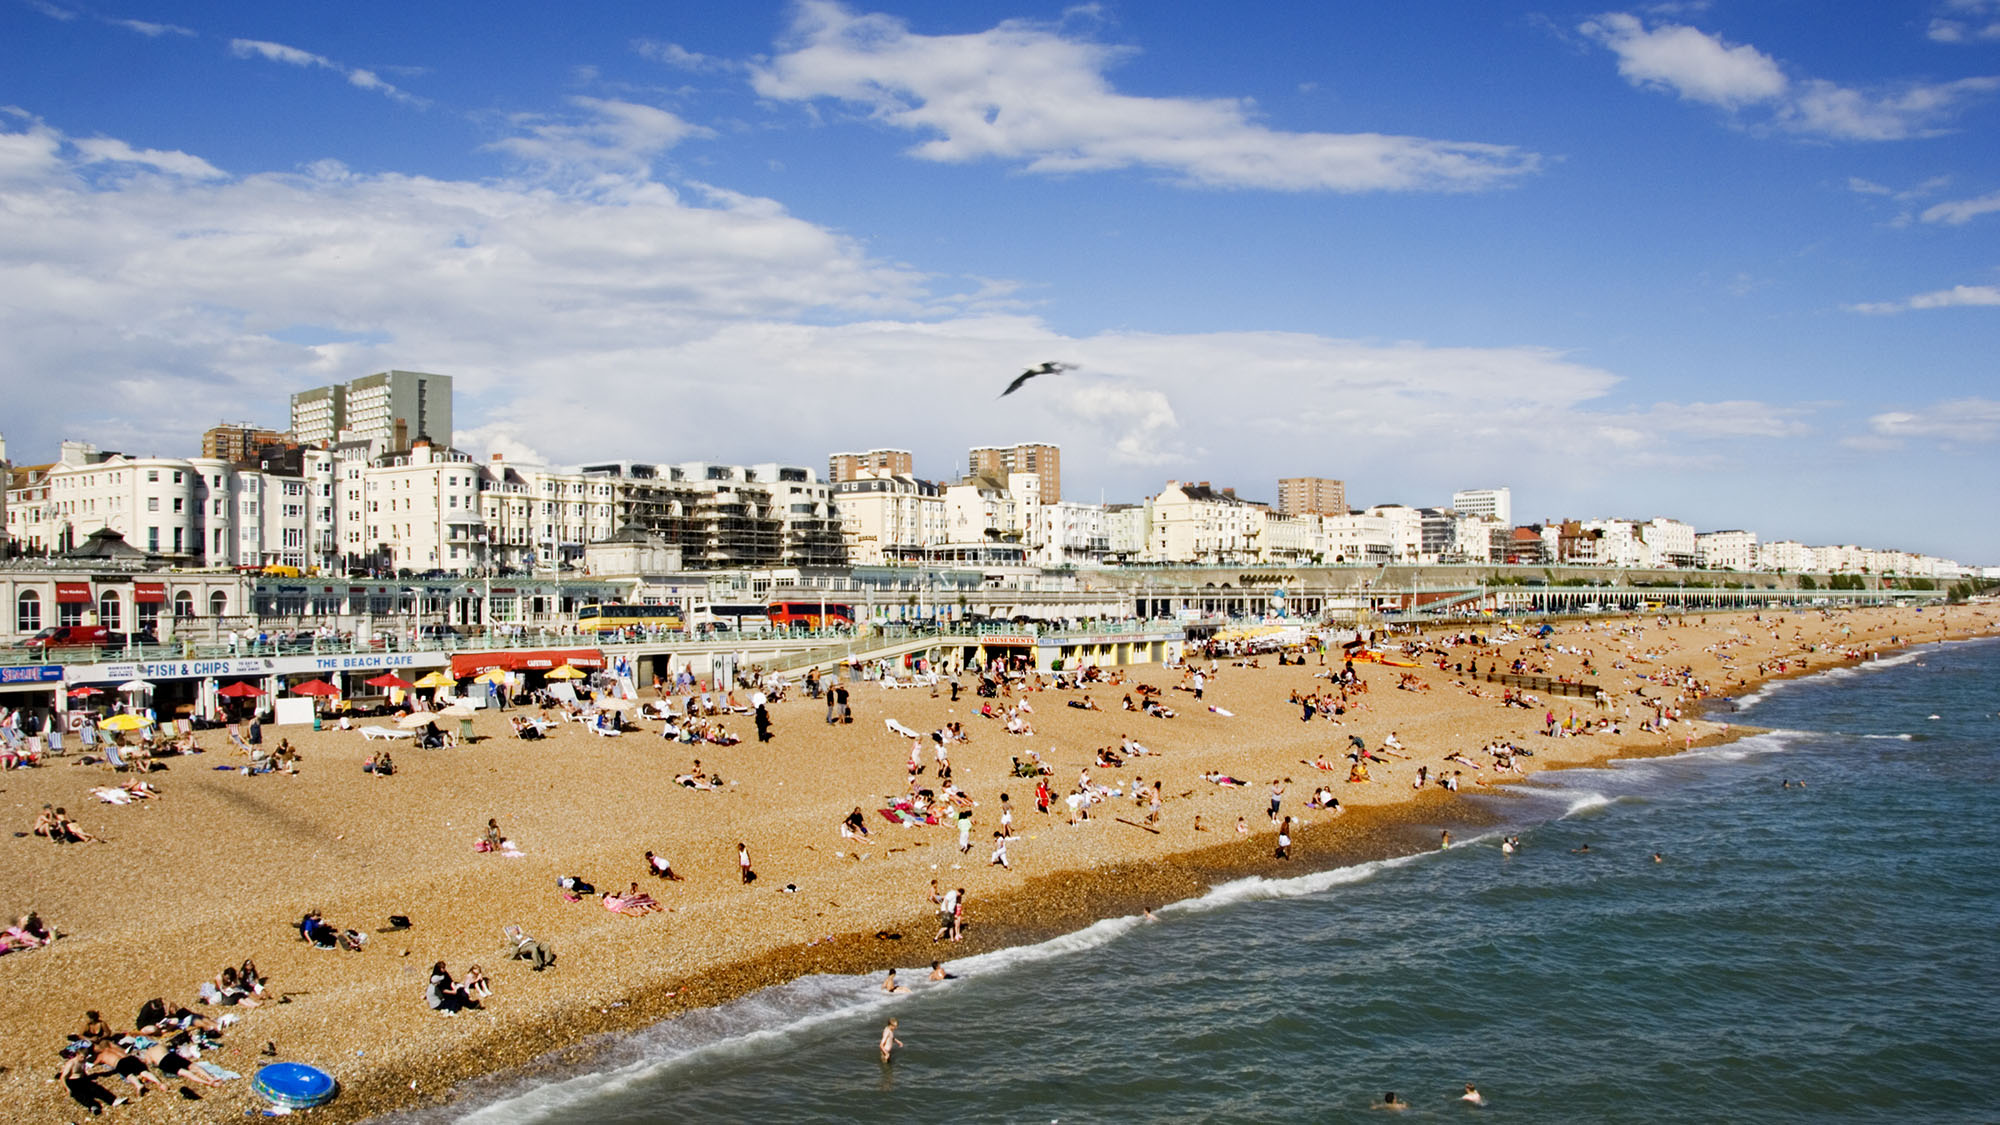 View of Brighton beach